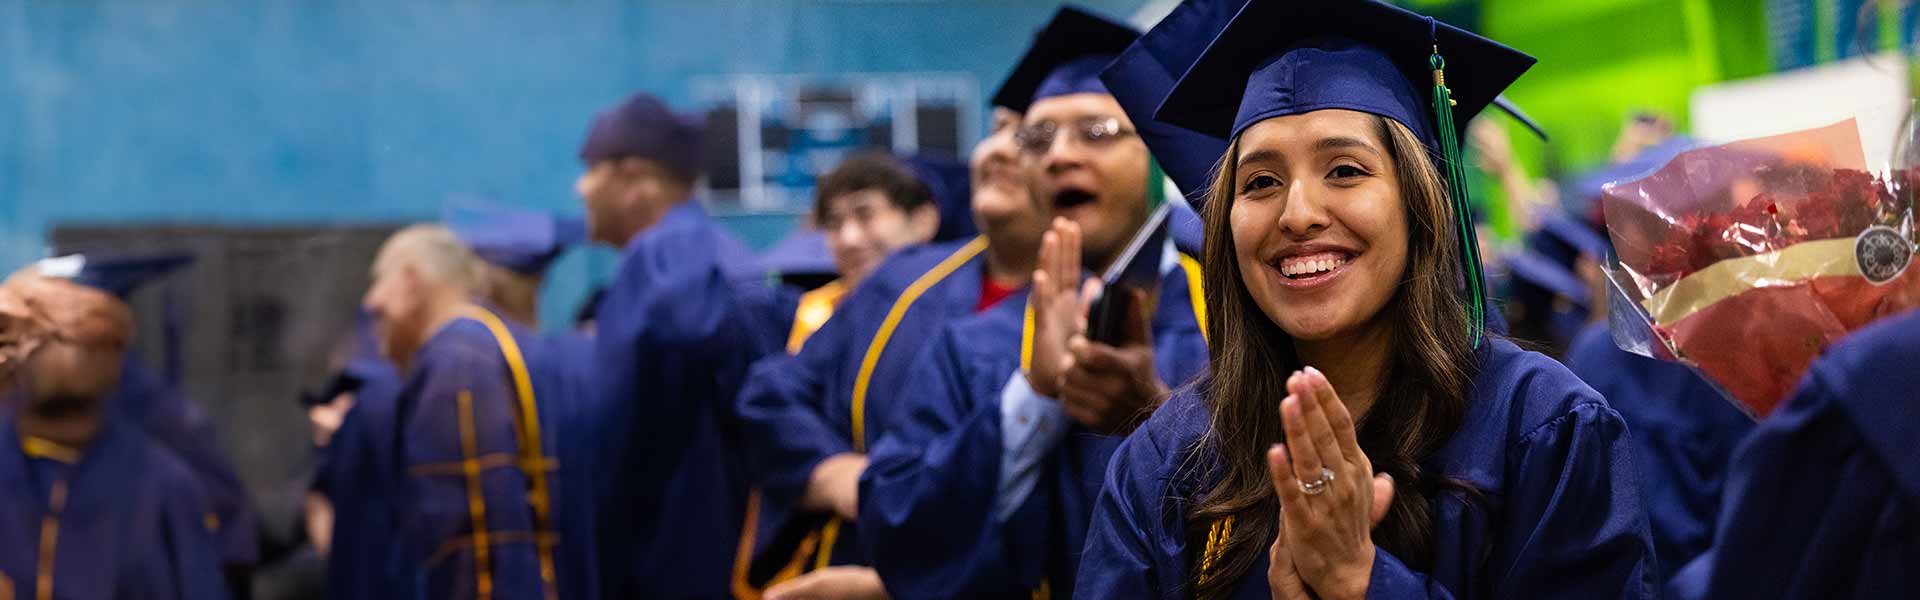 Graduation photo showing happy graduates